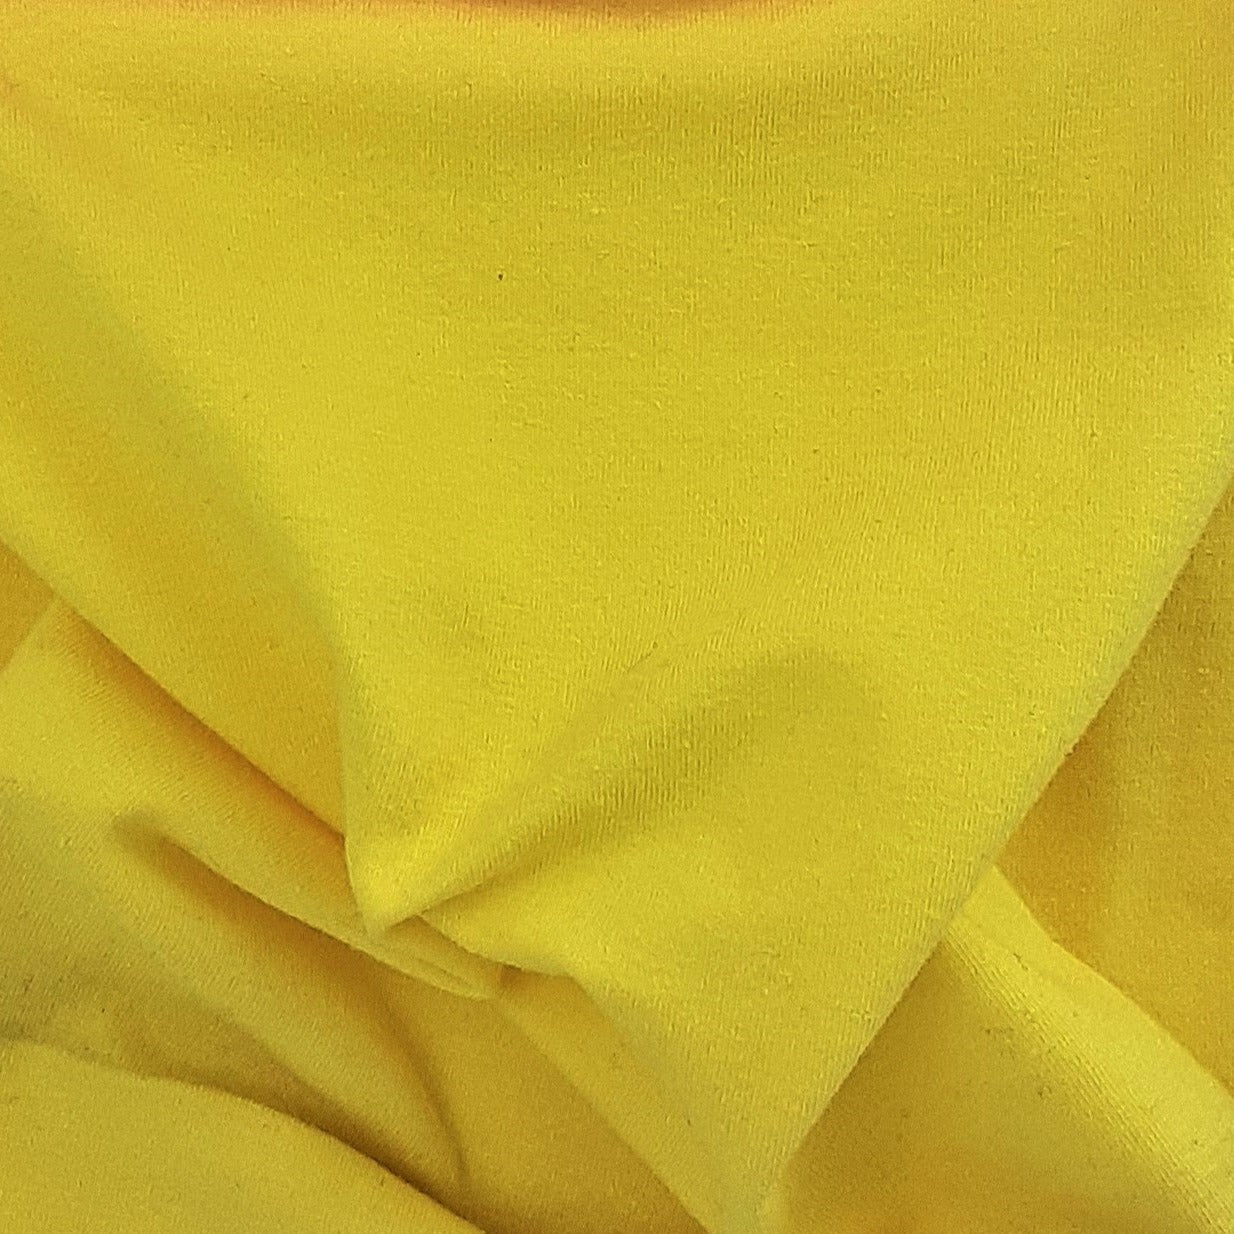 Light Yellow 10 Ounce  Cotton/Spandex Jersey Knit Fabric - SKU 2853A 